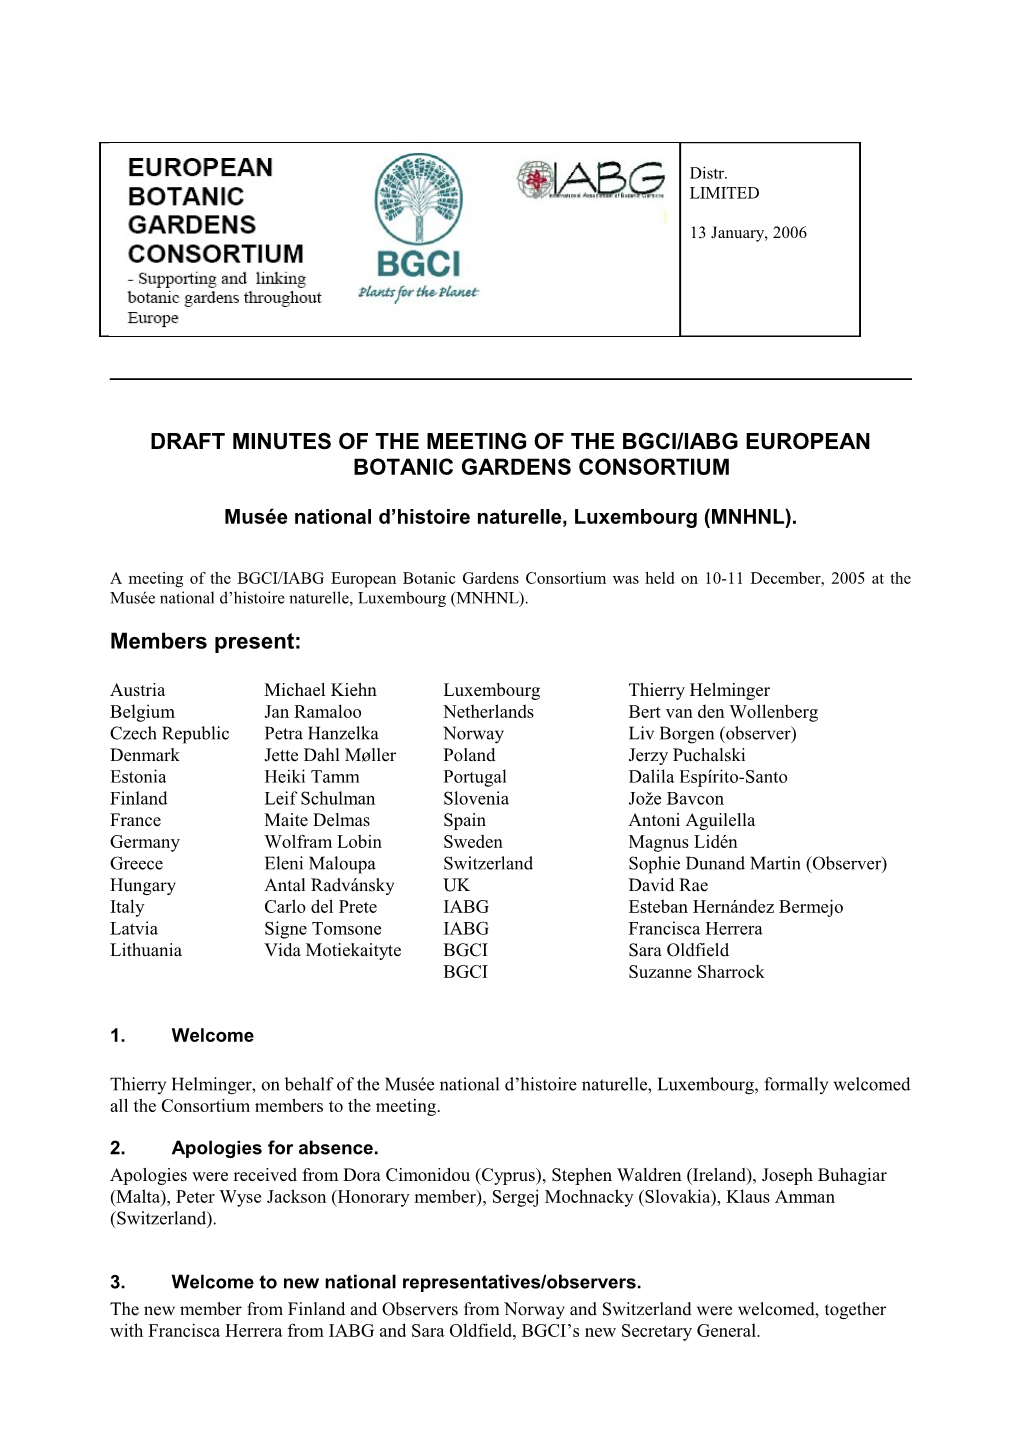 Draft Minutes of the Meeting of the Bgci/Iabg European Botanic Gardens Consortium